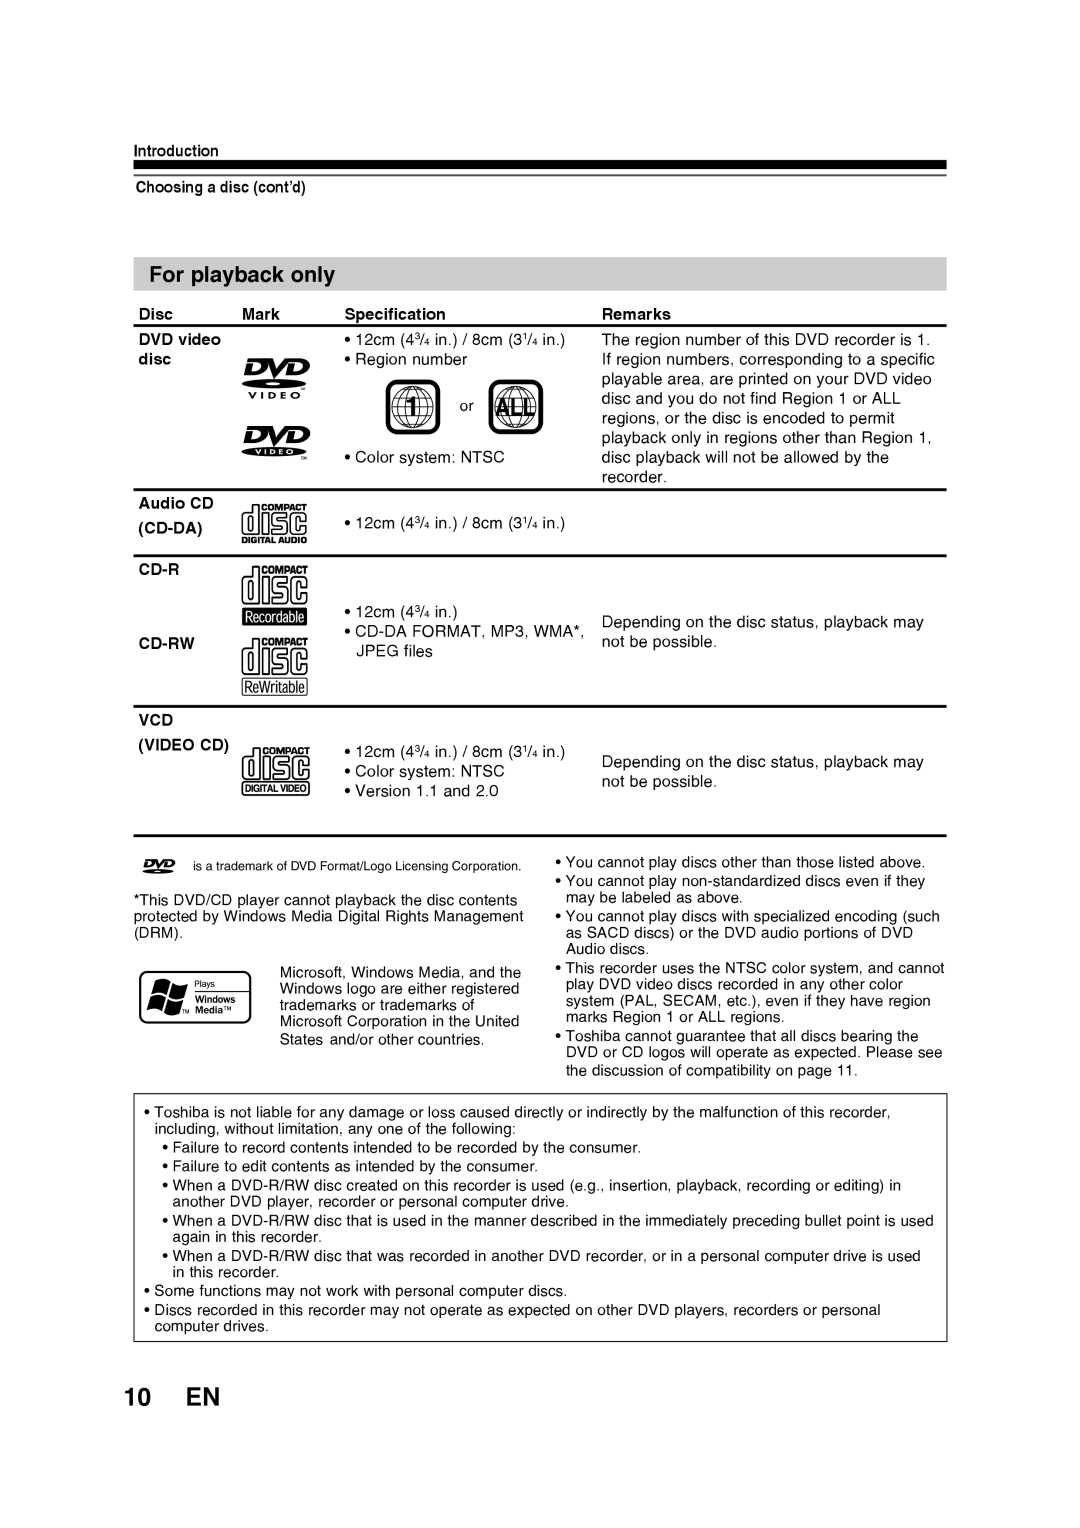 Toshiba D-RW2SU/D-RW2SC 10 EN, For playback only, Introduction Choosing a disc cont’d, DVD video, Audio CD, Cd-Da, Cd-R 